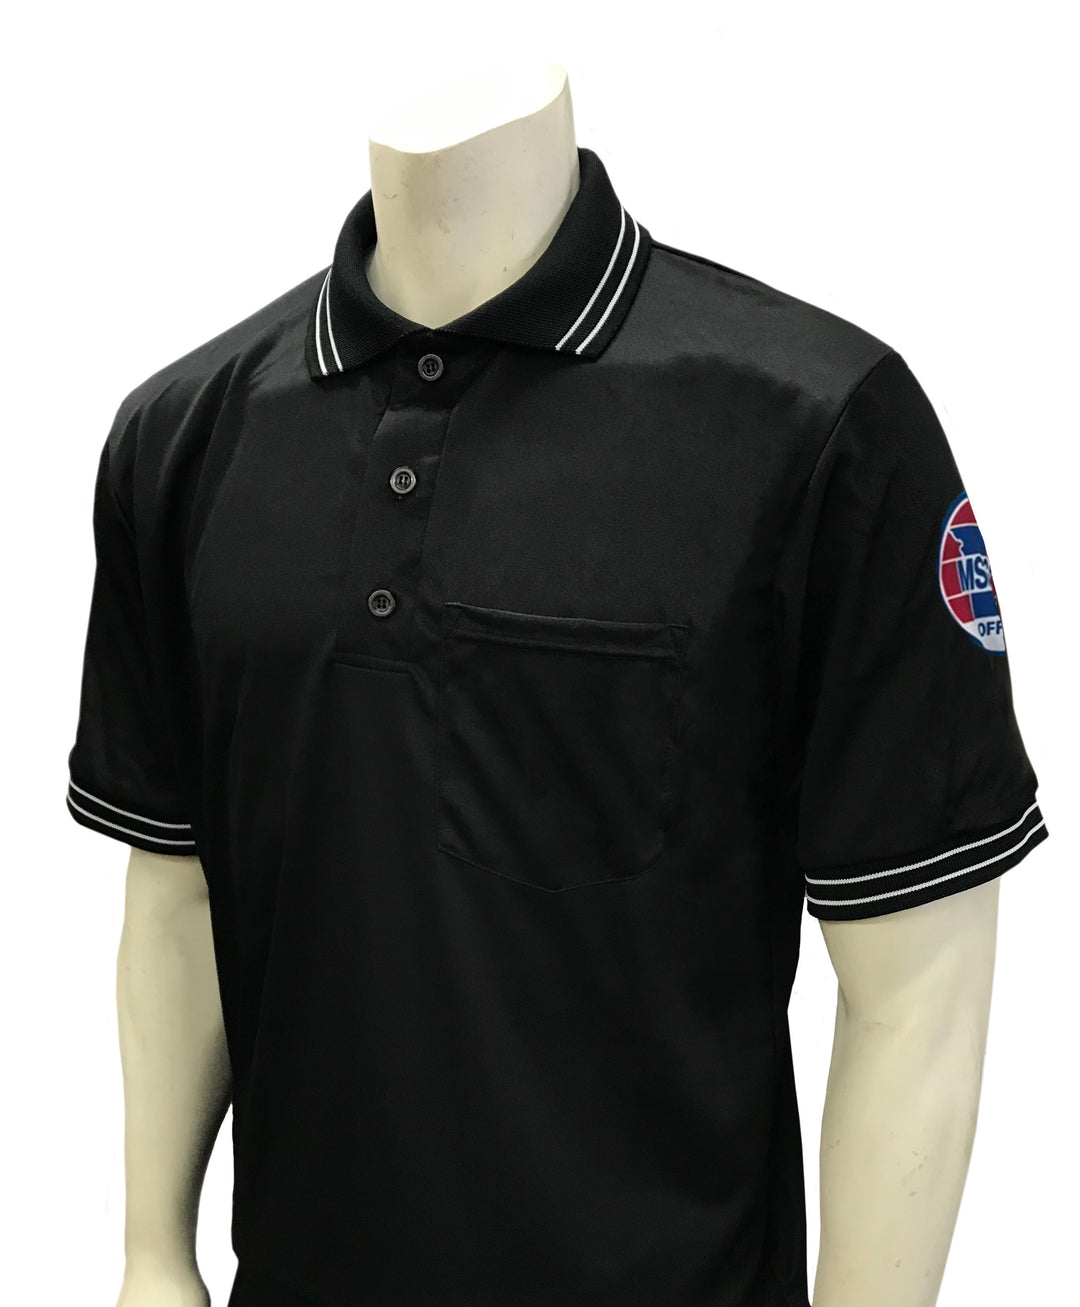 Copy of USA300MO - Smitty "Made in USA" - Short Sleeve Baseball Ump Shirt Black